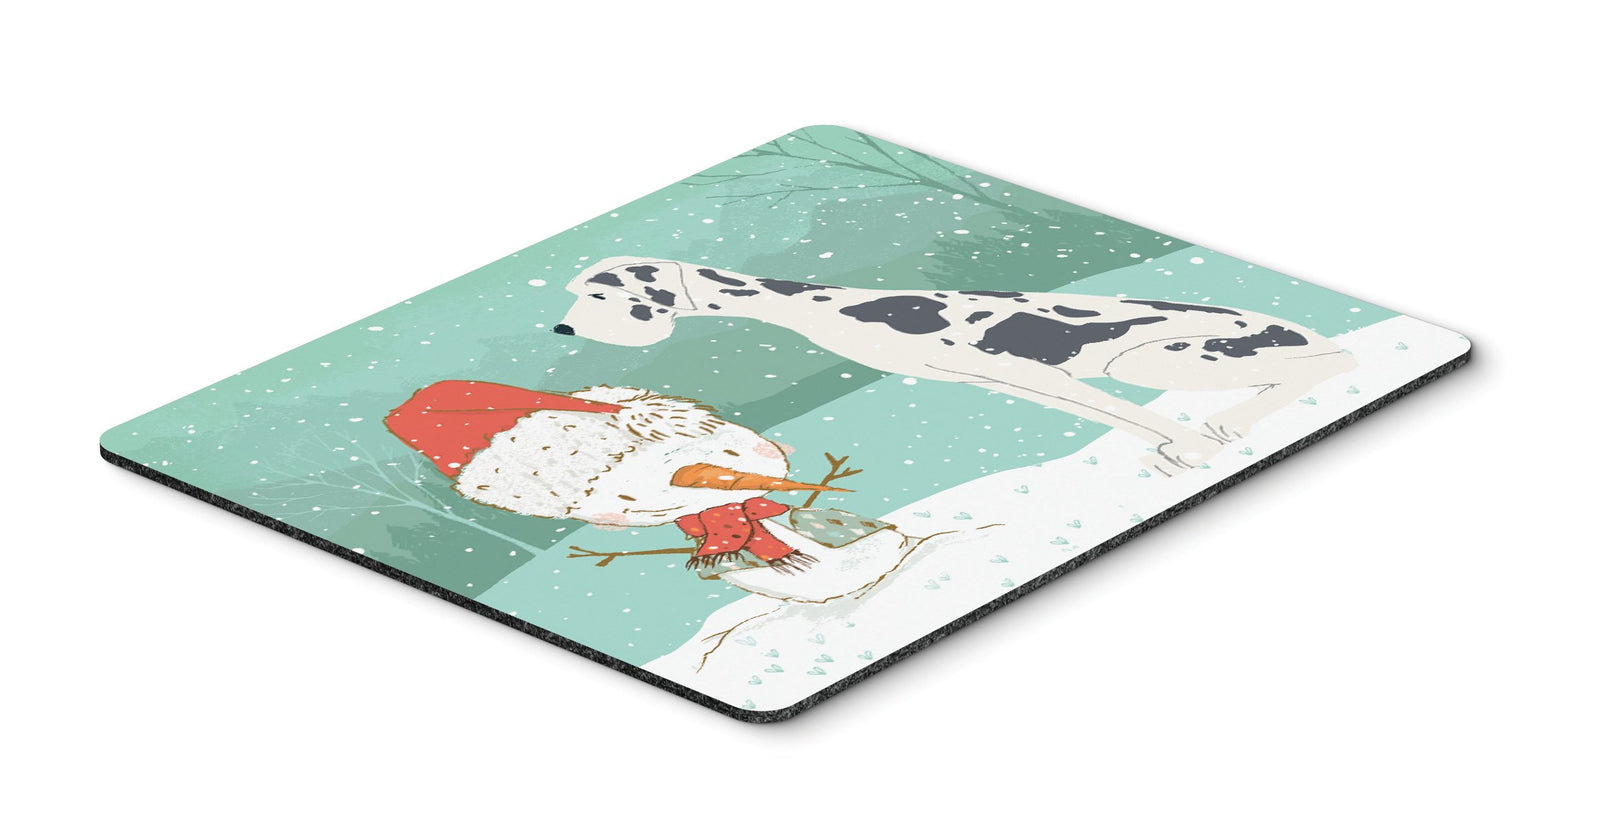 Harlequin Great Dane Snowman Christmas Mouse Pad, Hot Pad or Trivet CK2042MP by Caroline's Treasures